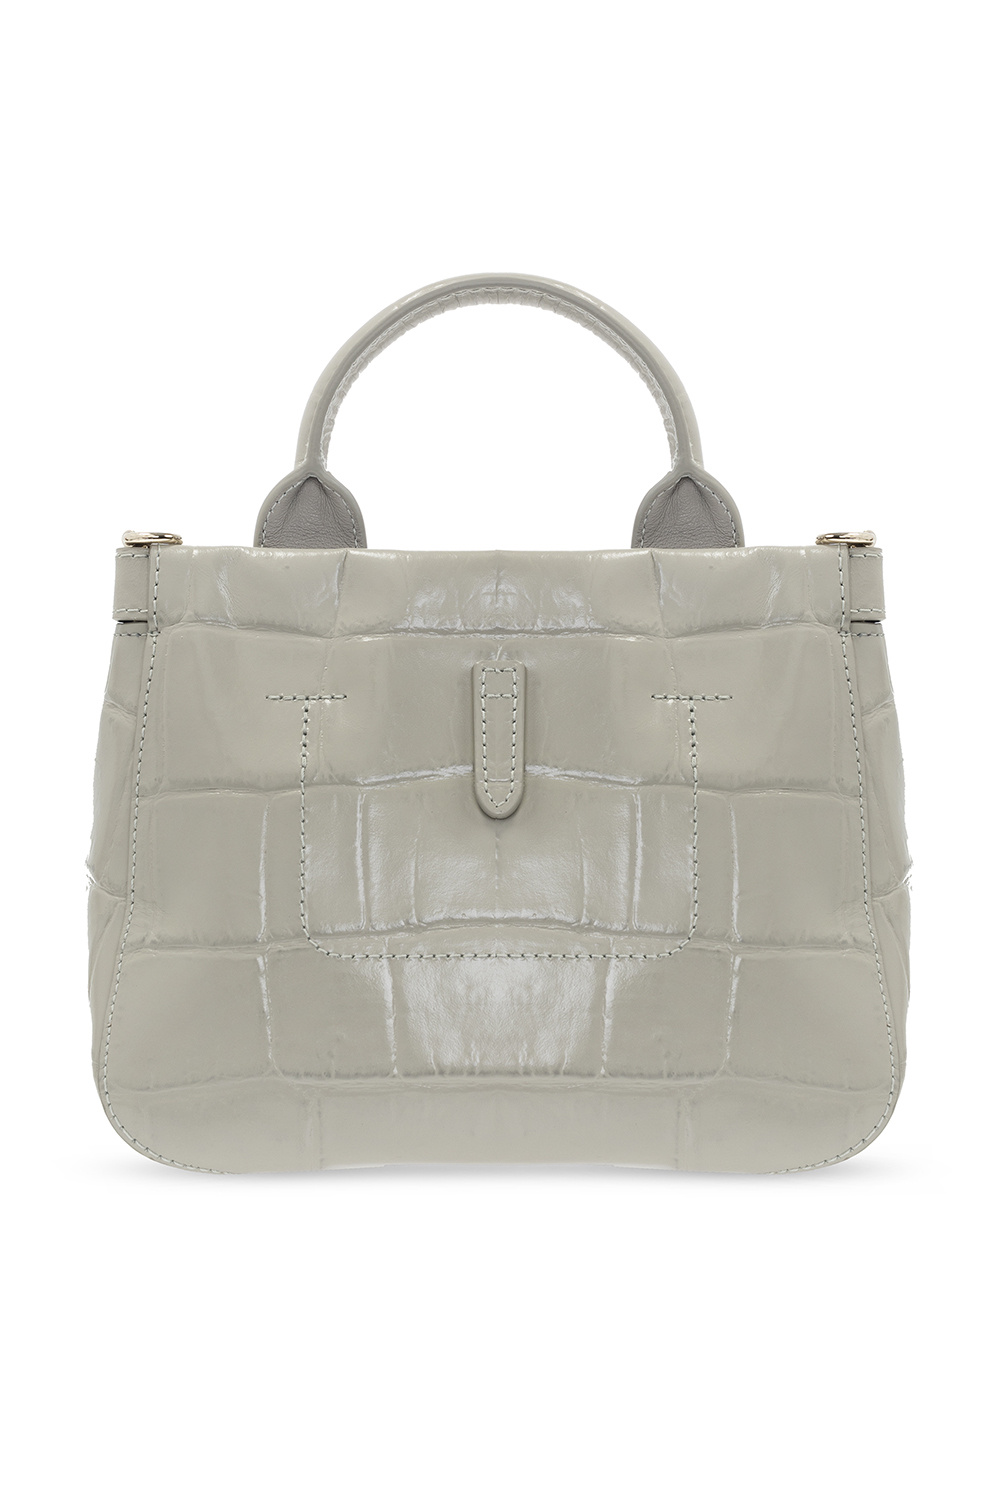 IetpShops shop online - Shoe Bag 1316577-041 Grey - Louis Vuitton